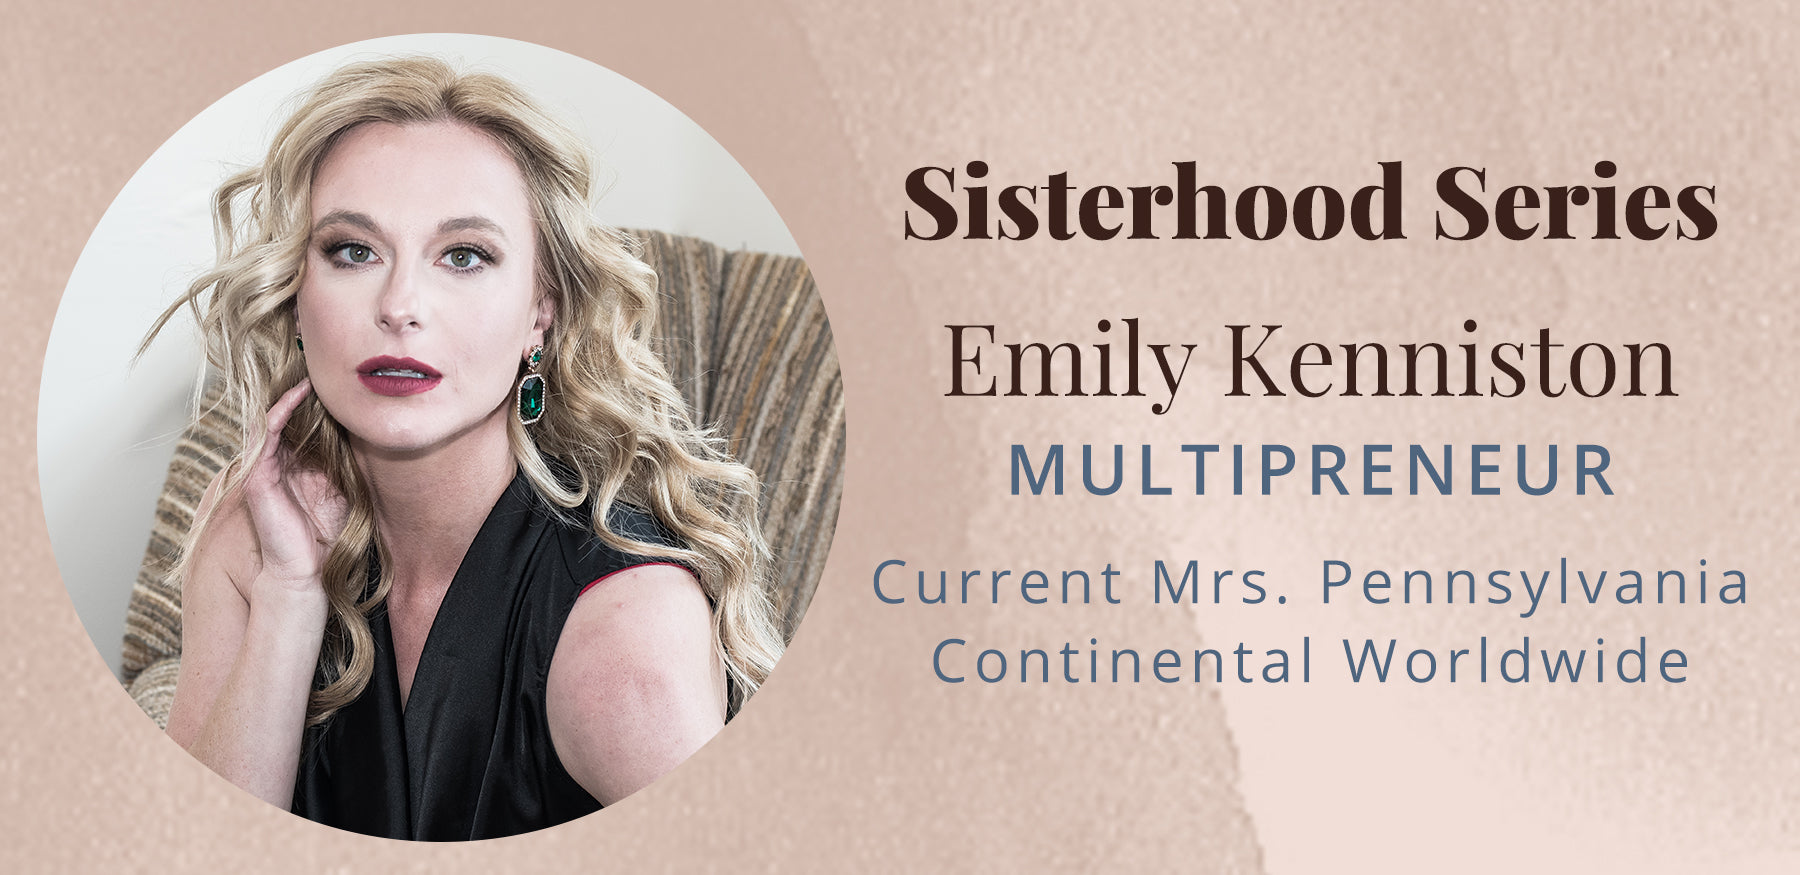 Sisterhood Series with Emily Kenniston